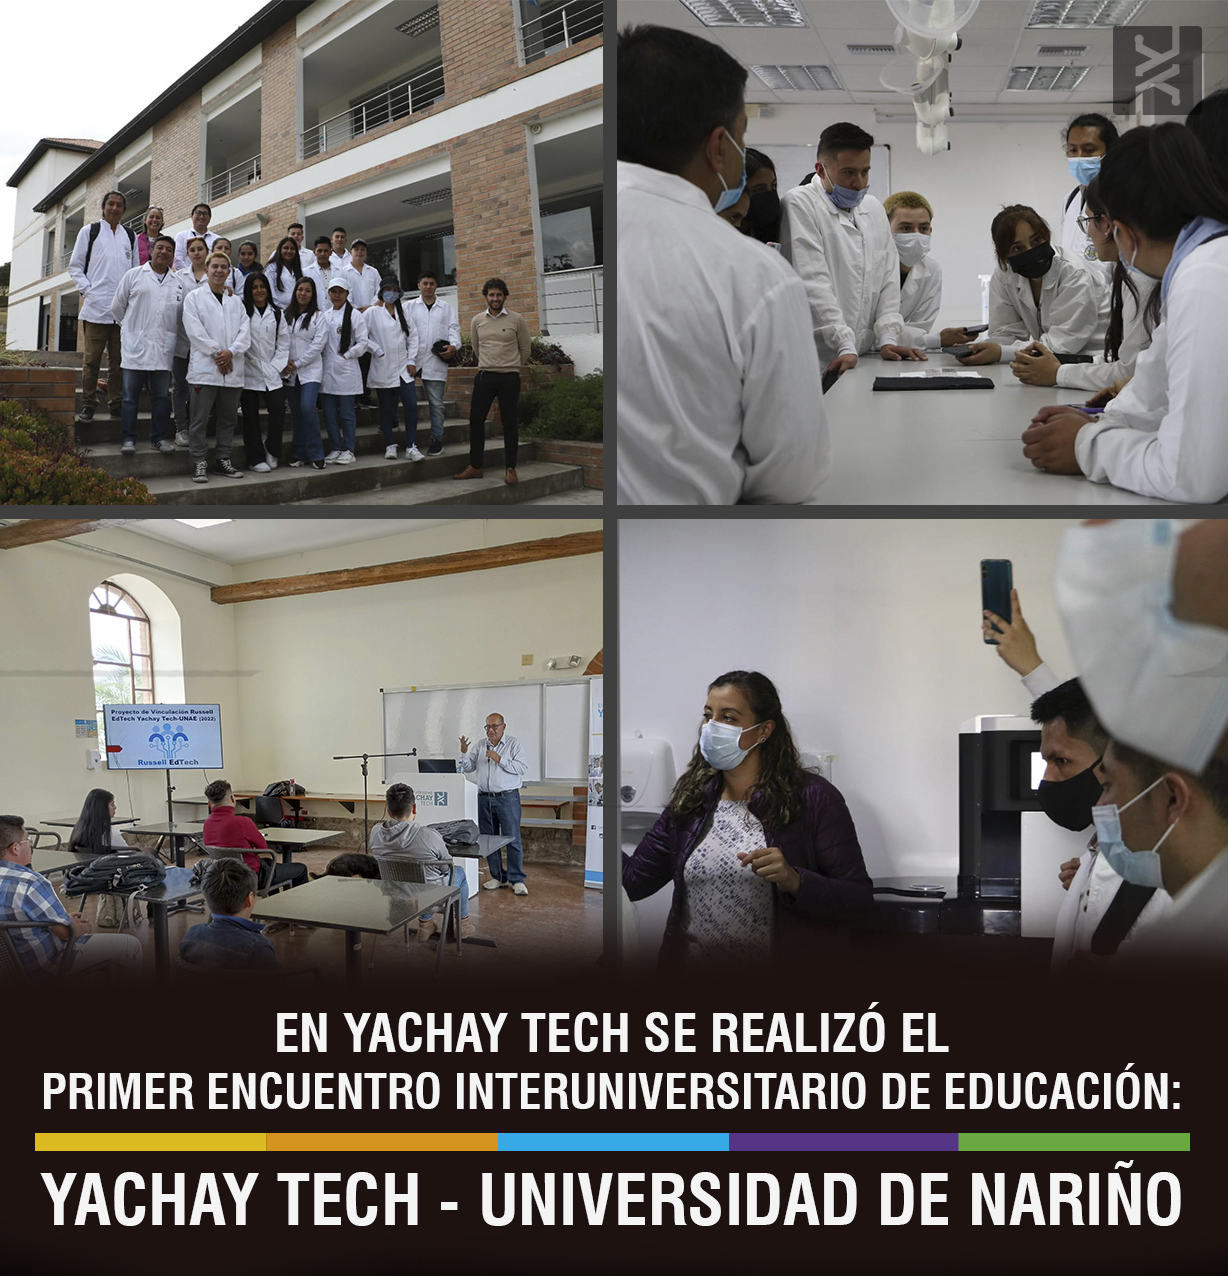 FIRST INTERUNIVERSITY EDUCATION MEETING TOOK PLACE AT YACHAY TECH: YACHAY TECH – UNIVERSITY OF NARIÑO